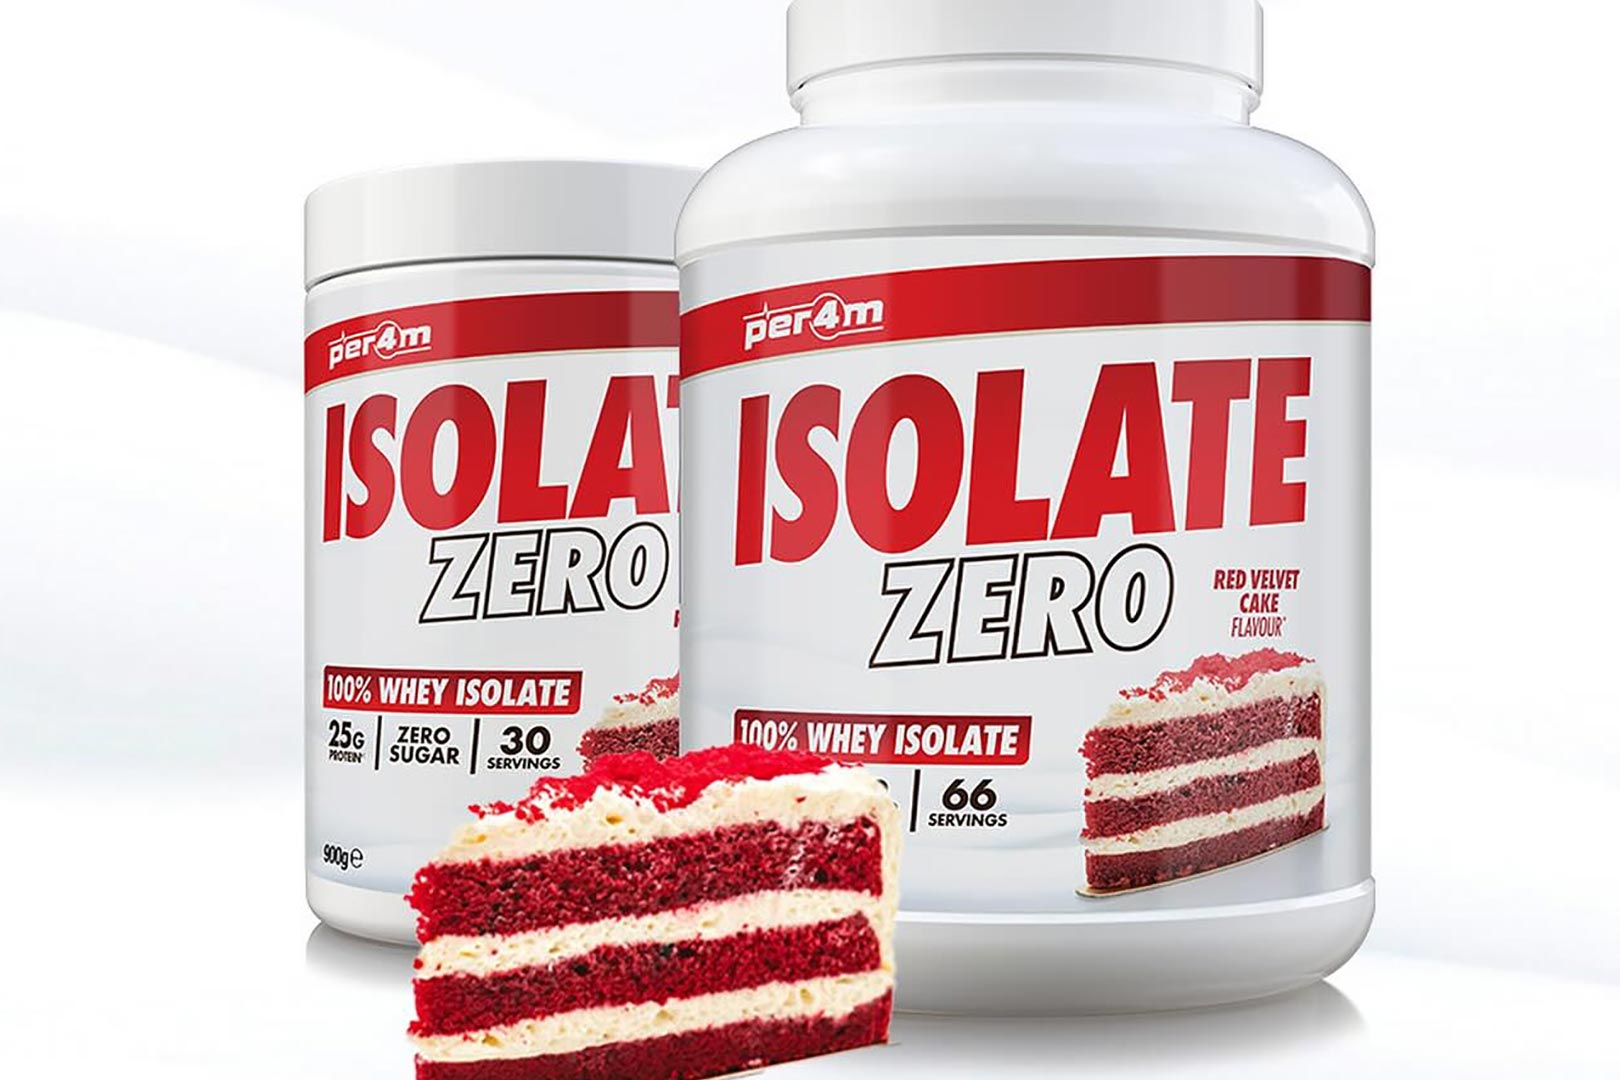 Per4m Red Velvet Cake Isolate Zero